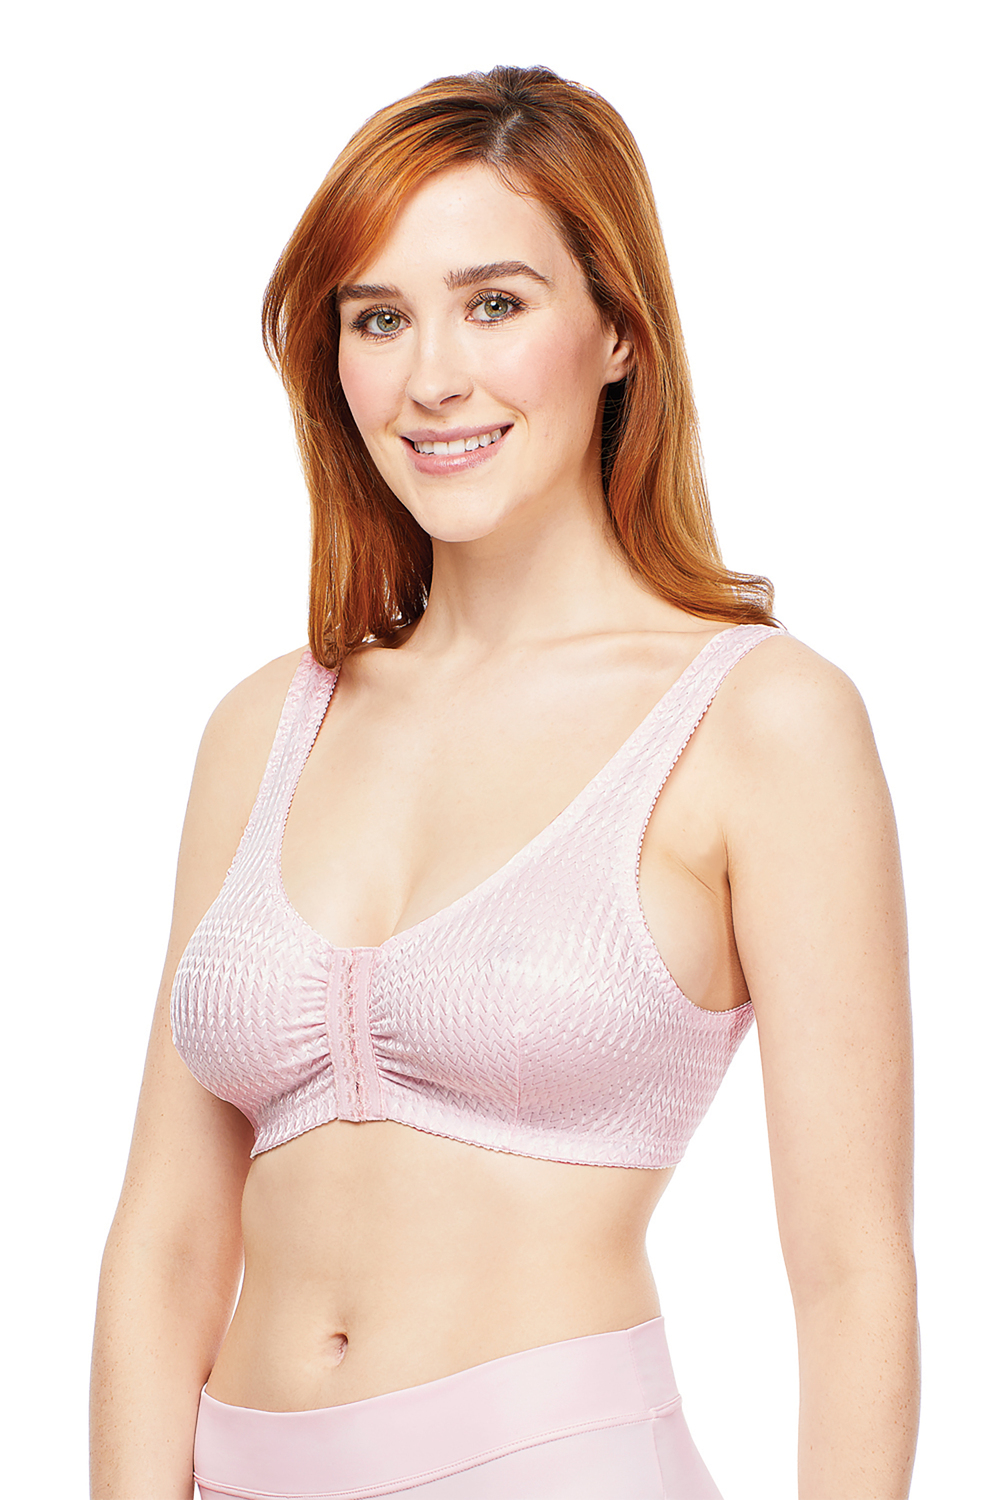 Carole Martin - The original! Full Freedom Comfort bra, pink, 36. Colour:  pink. Size: 36 b/c/d/dd